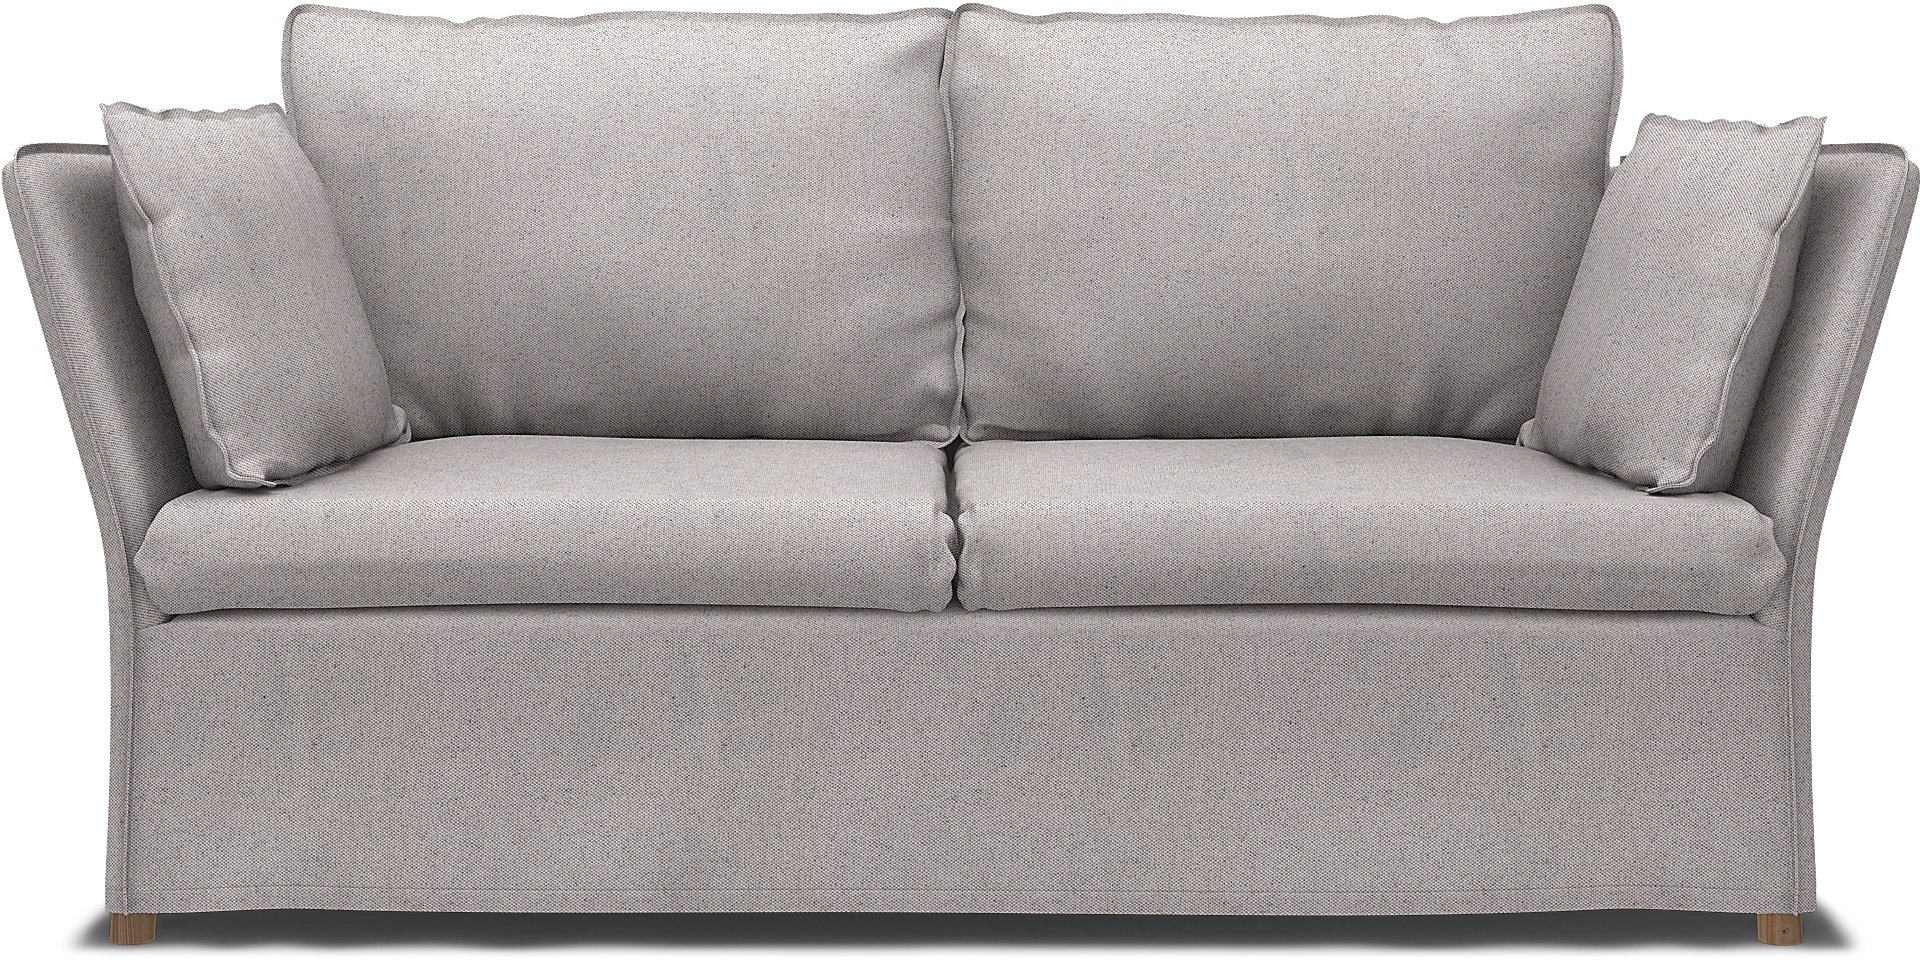 IKEA - Backsalen 2 seater sofa, Natural, Cotton - Bemz